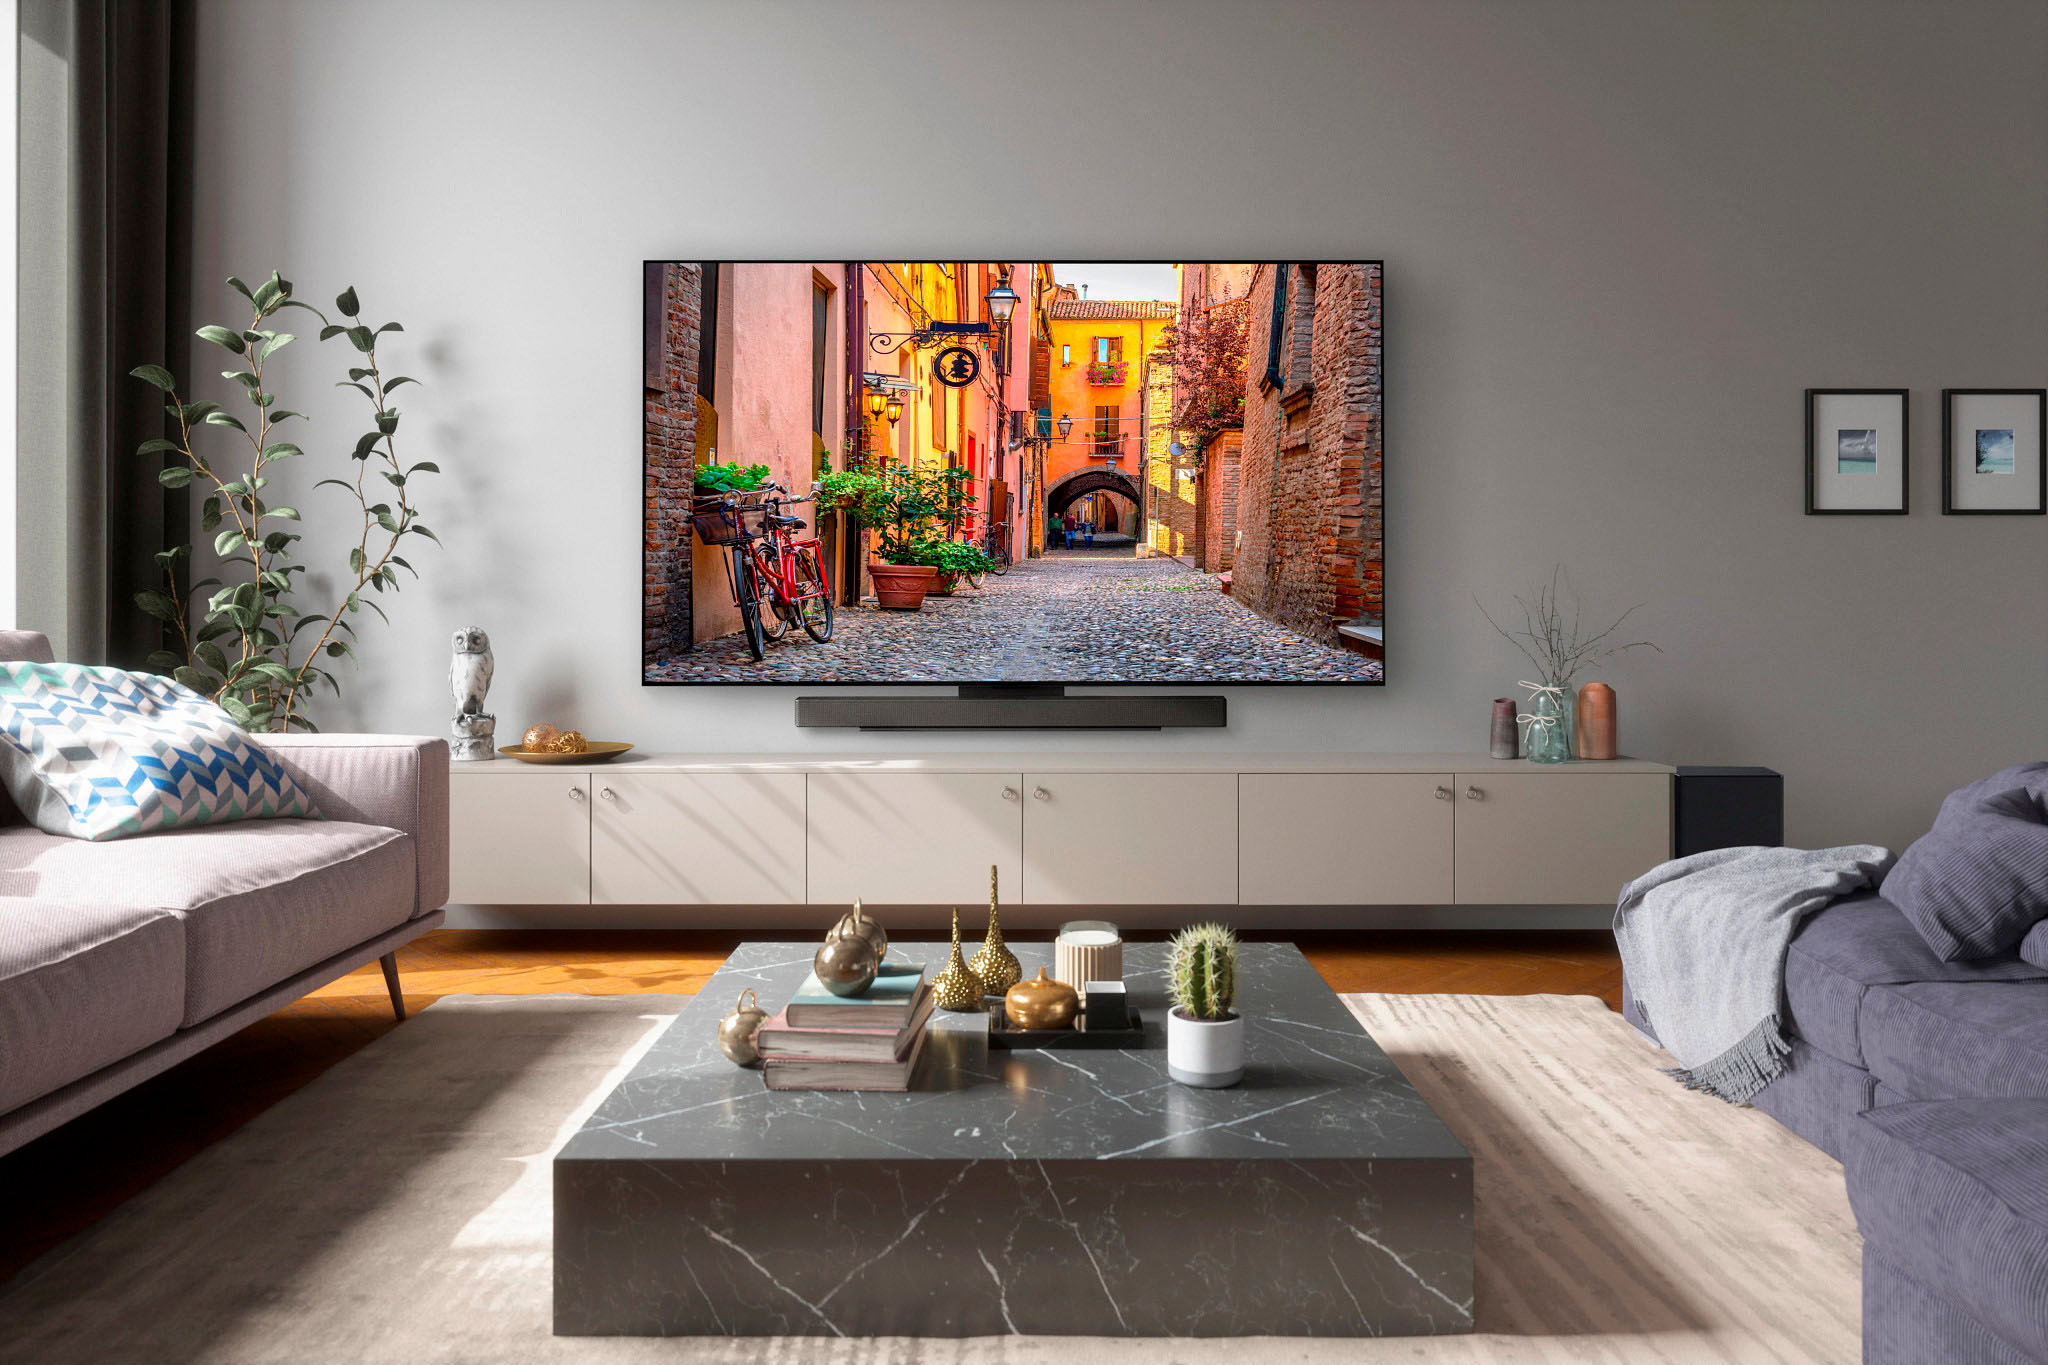 Best Buy: LG 55 Class C2 Series OLED evo 4K UHD Smart webOS TV